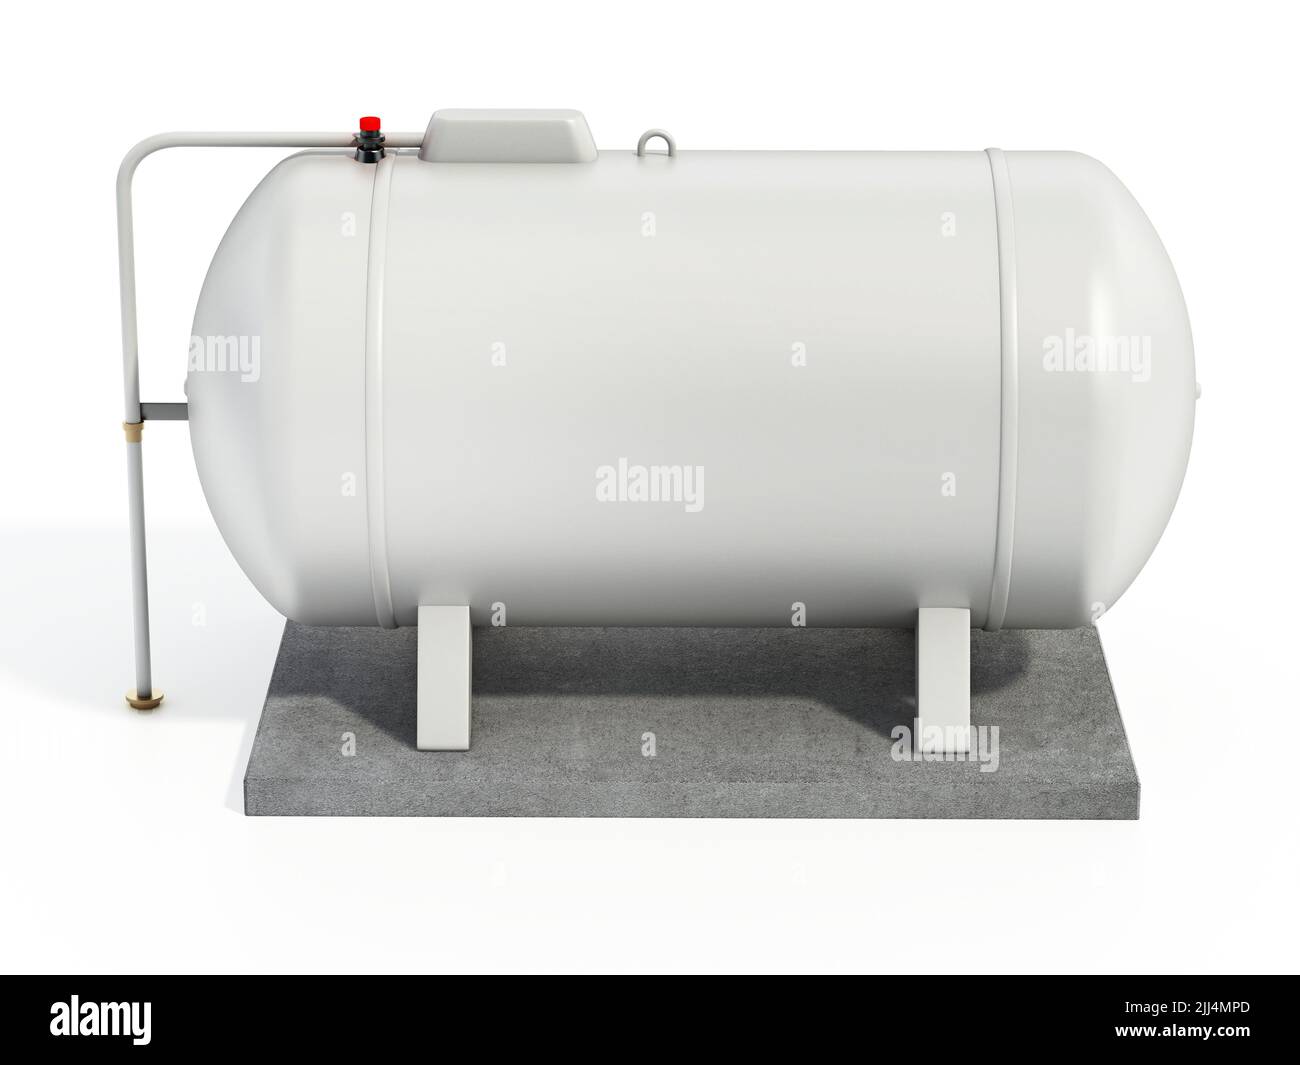 Propane tank isolated on white background. 3D illustration. Stock Photo